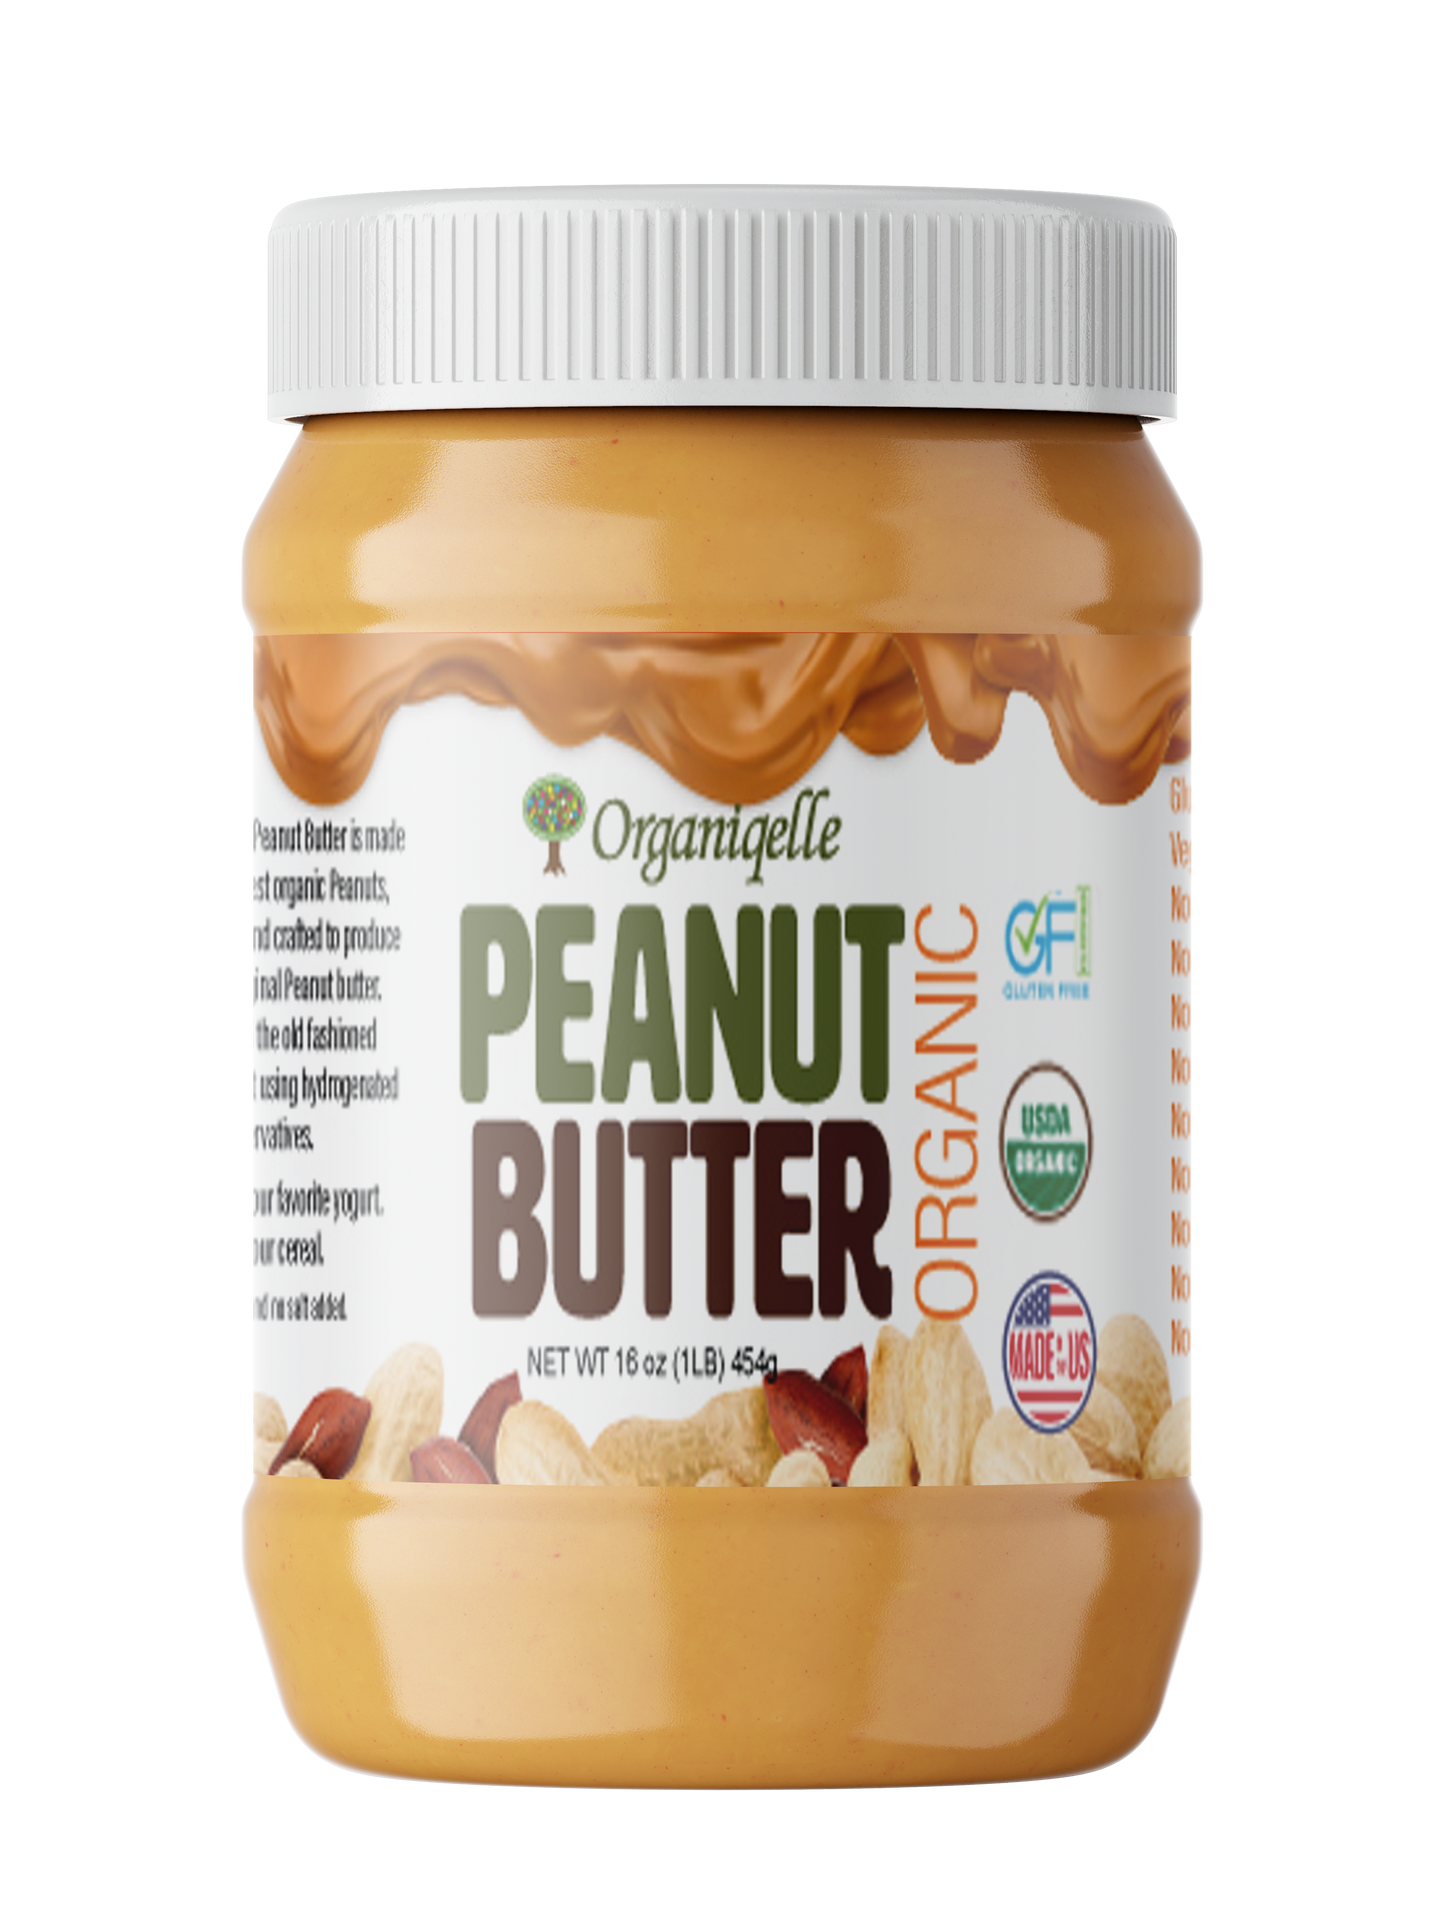 Buy 5 Peanut Butter jars get 6th jar for Free